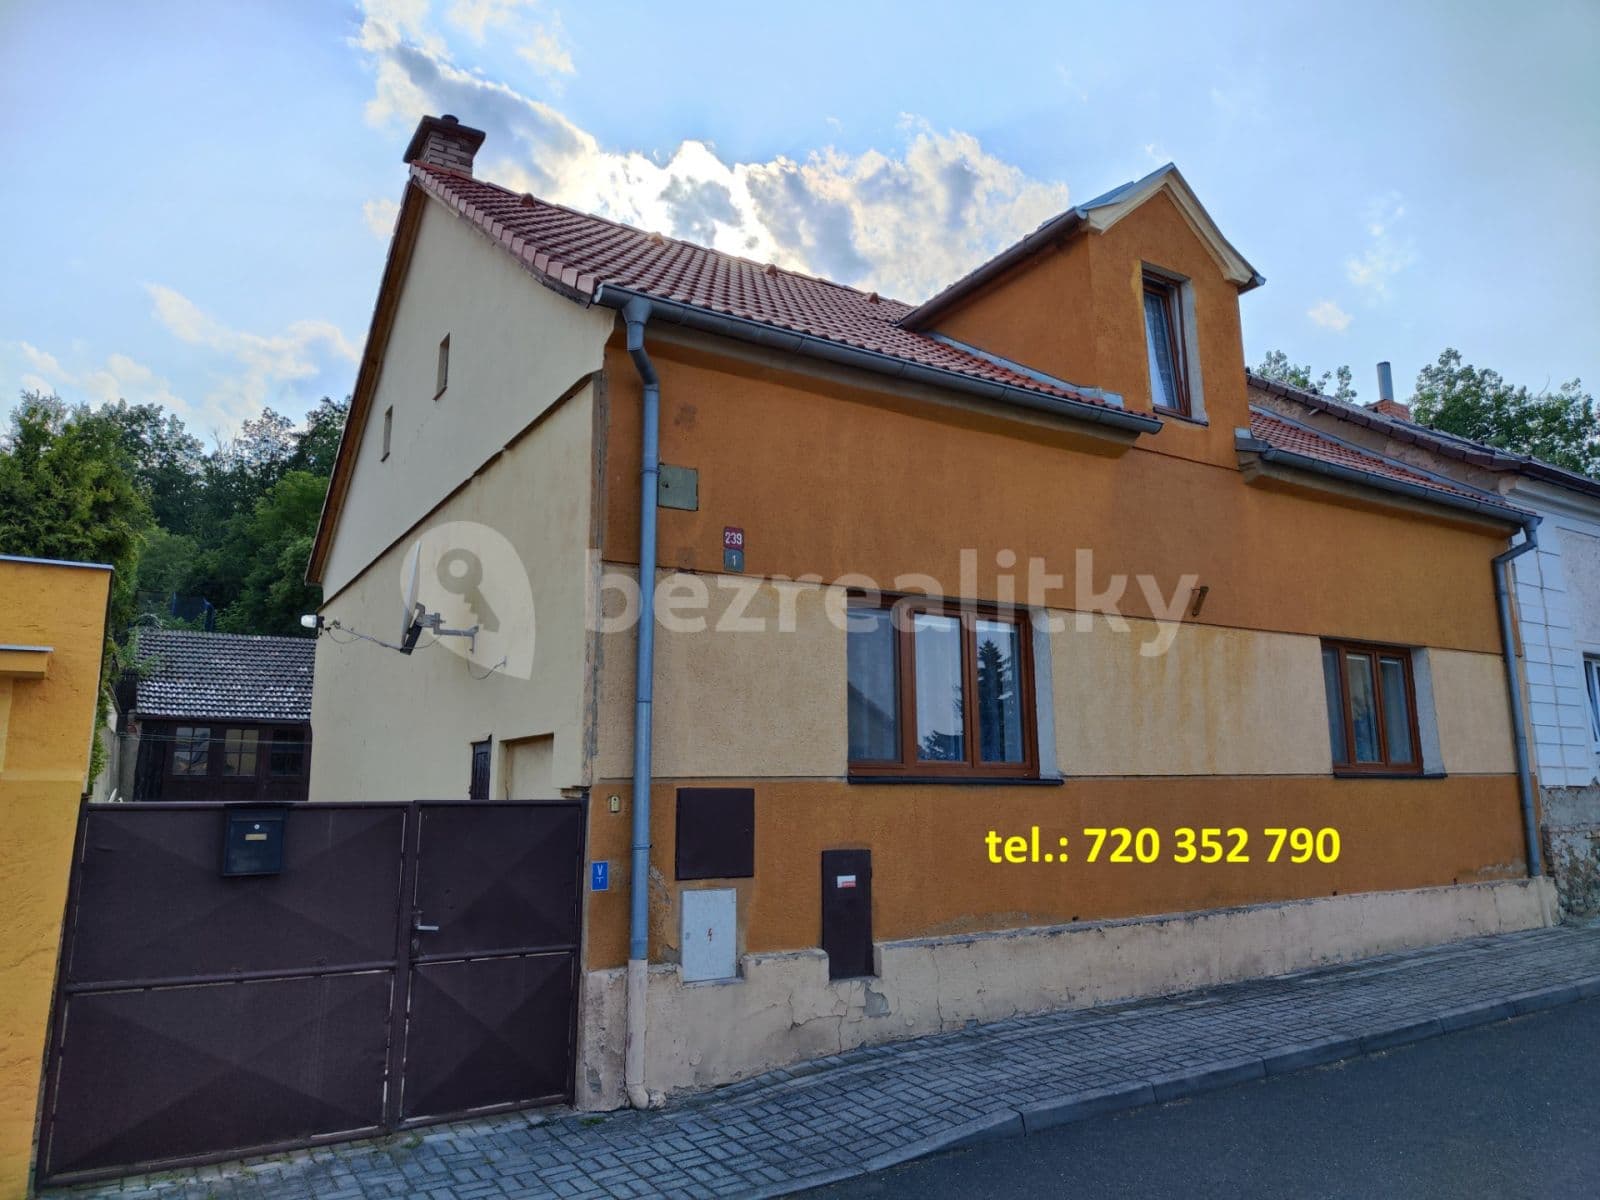 Prodej domu 104 m², pozemek 386 m², Uhelná, Bílina, Ústecký kraj